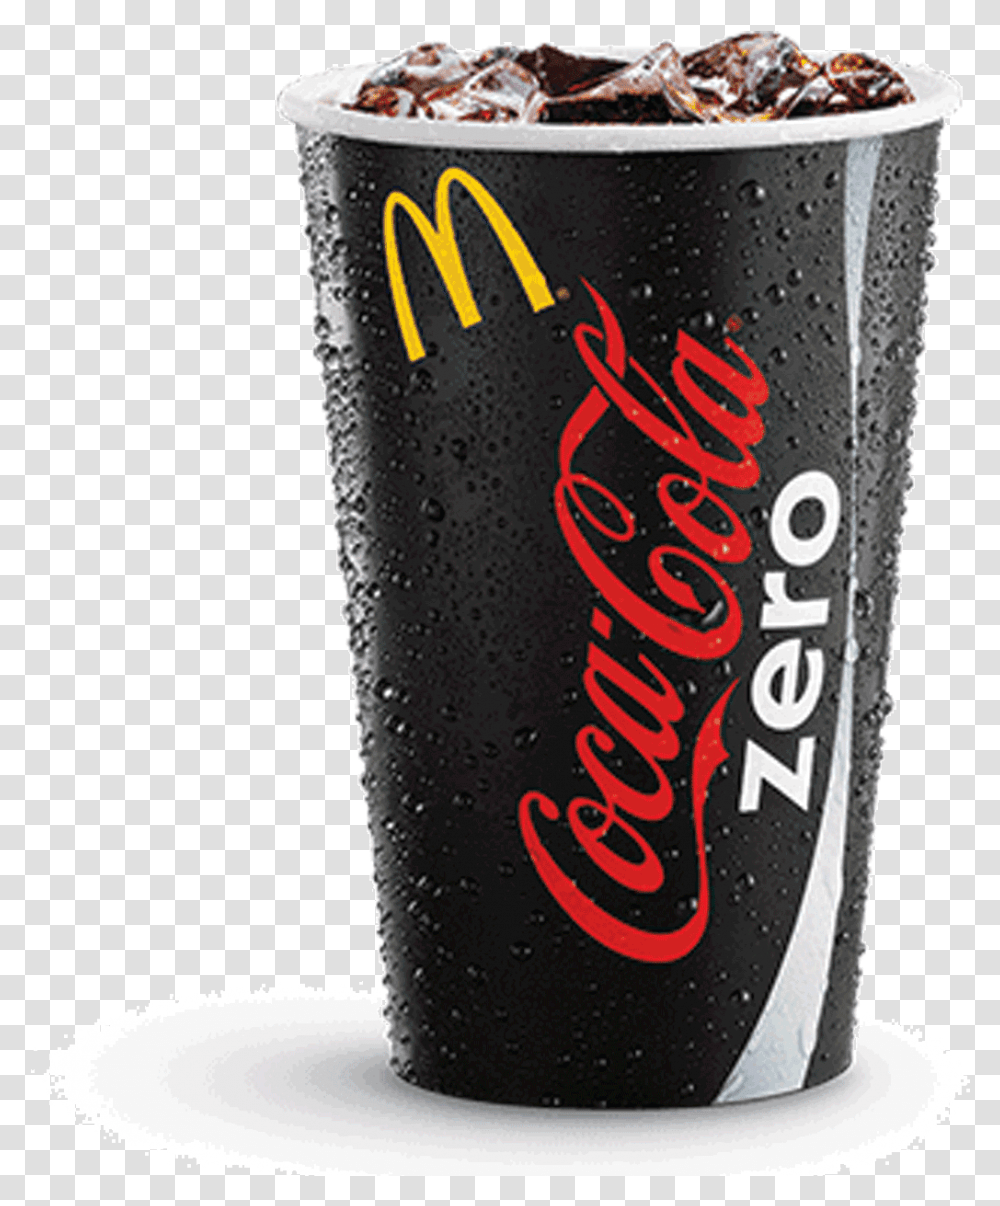 Menu Coke Zero Coca Cola, Beverage, Drink, Soda, Wedding Cake Transparent Png